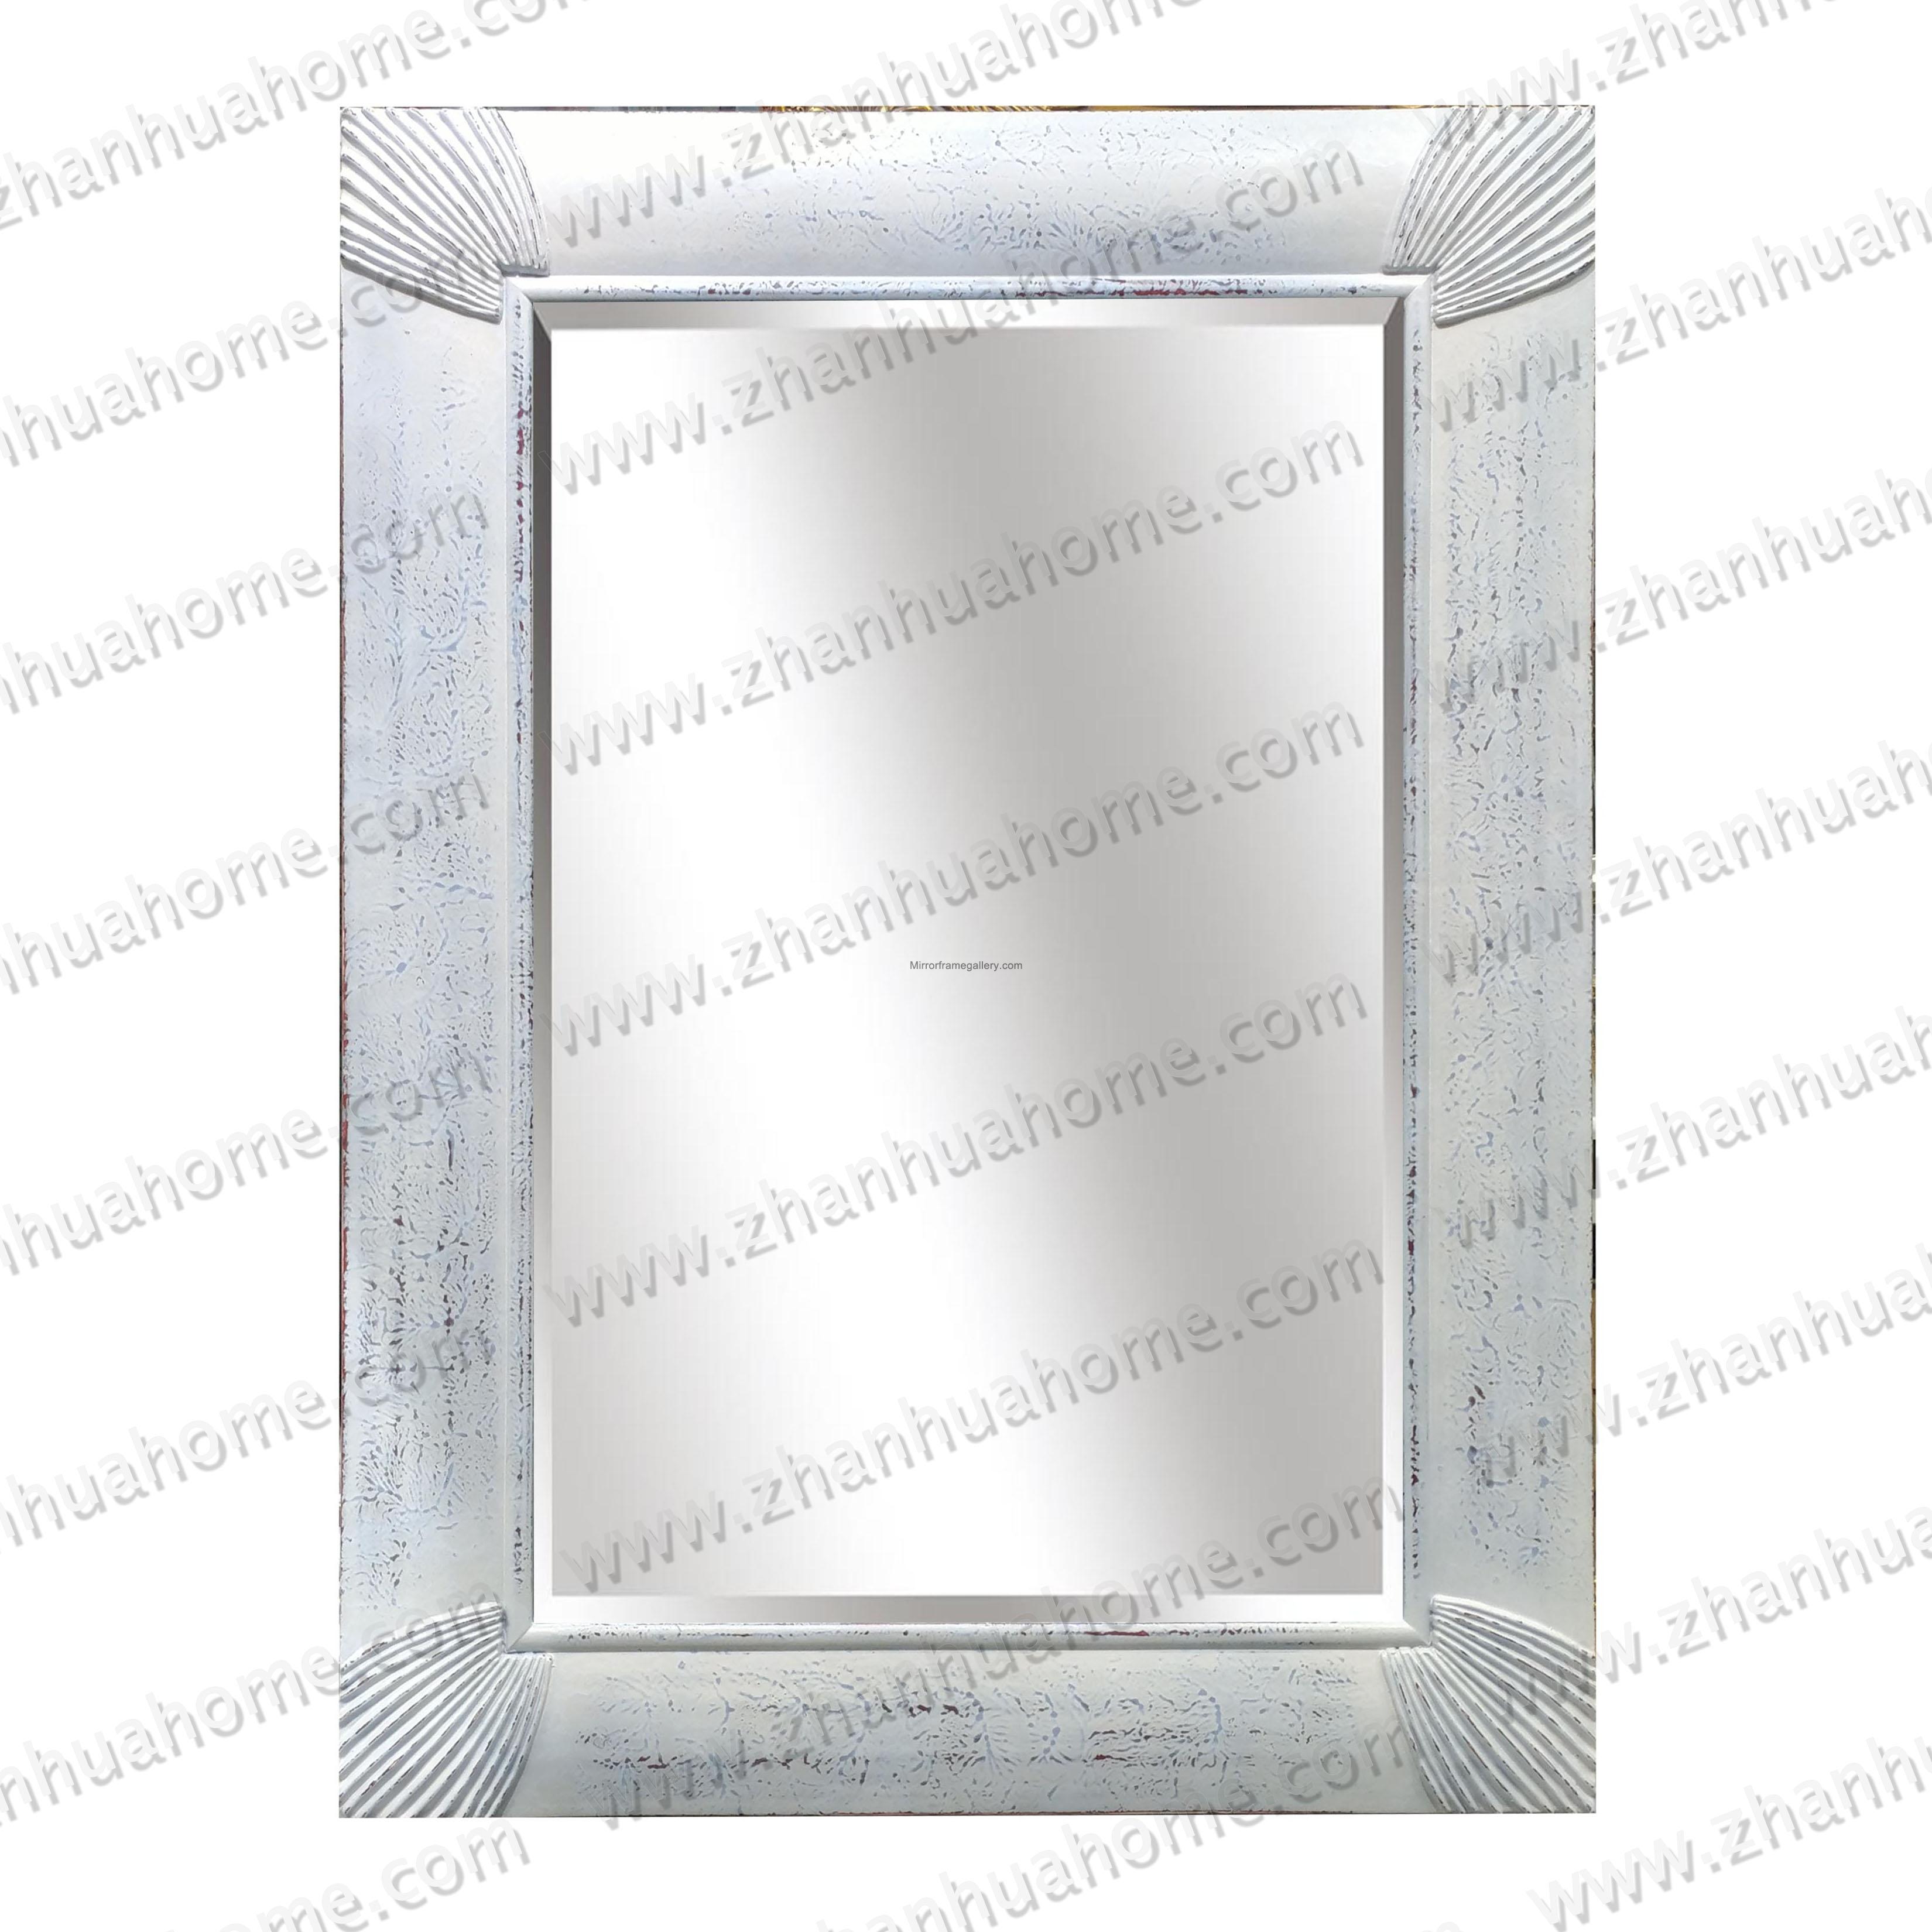 Distressed White Wall Mirror Frame